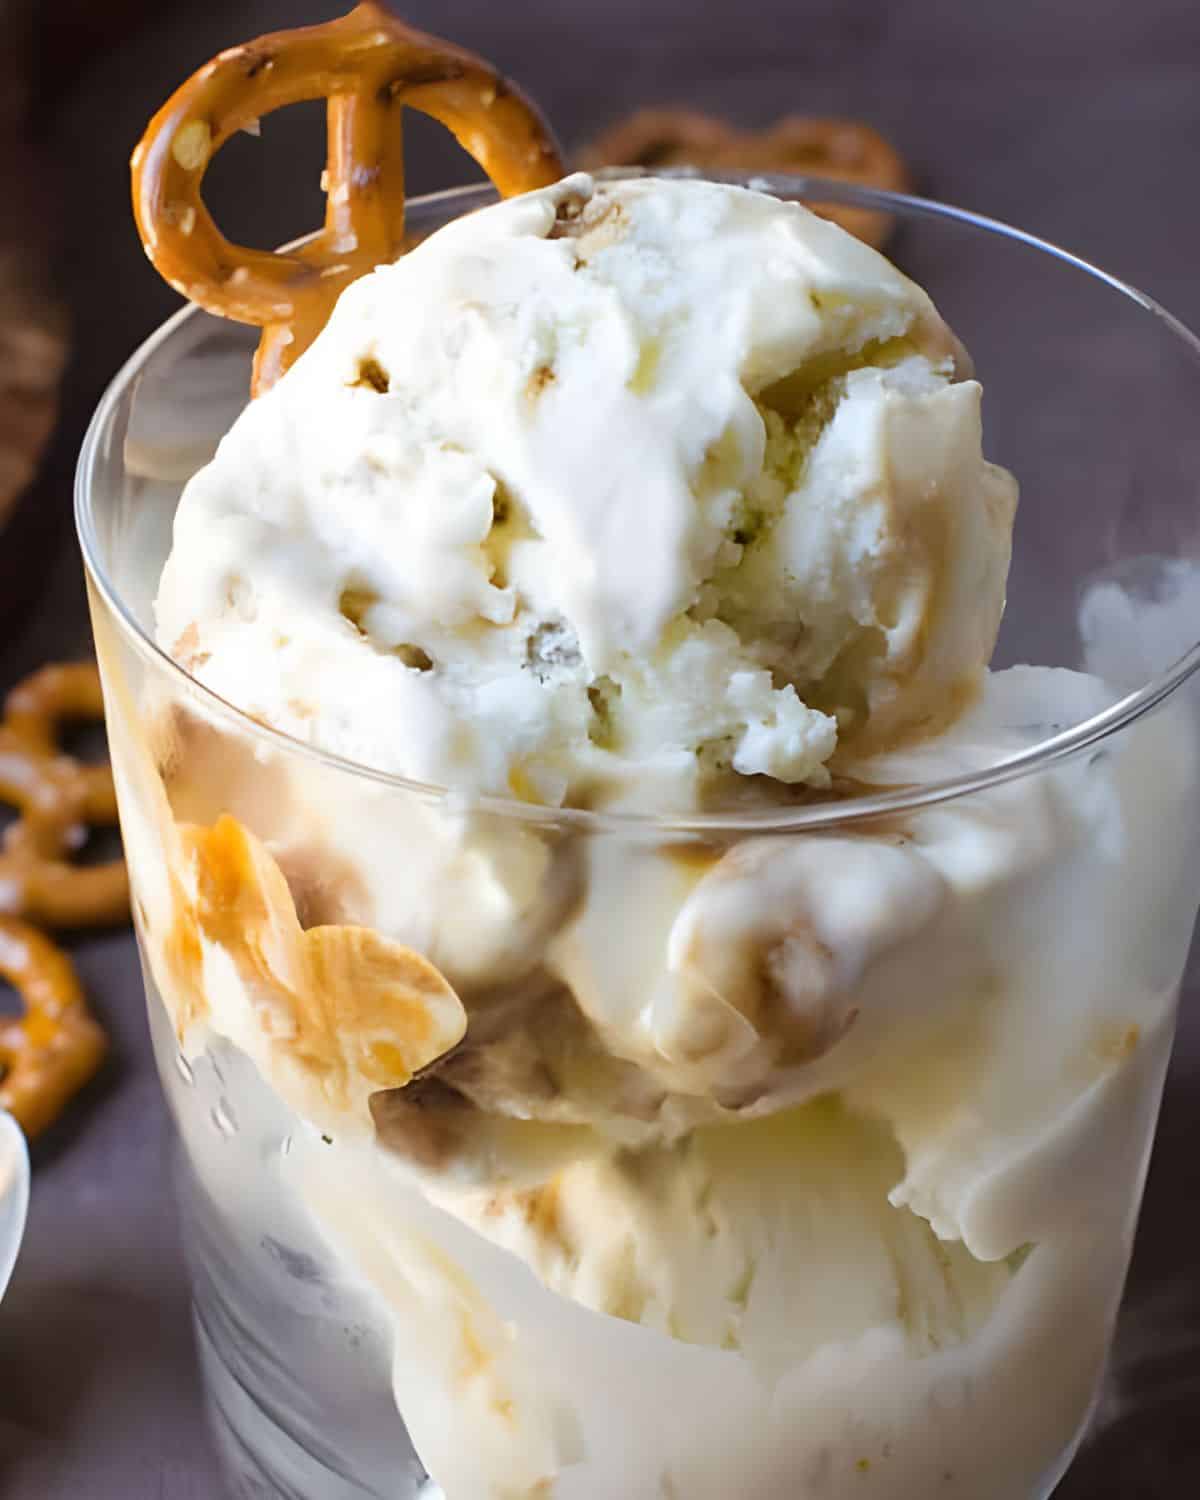 A serving of stout pretzel ice cream with extra pretzels.